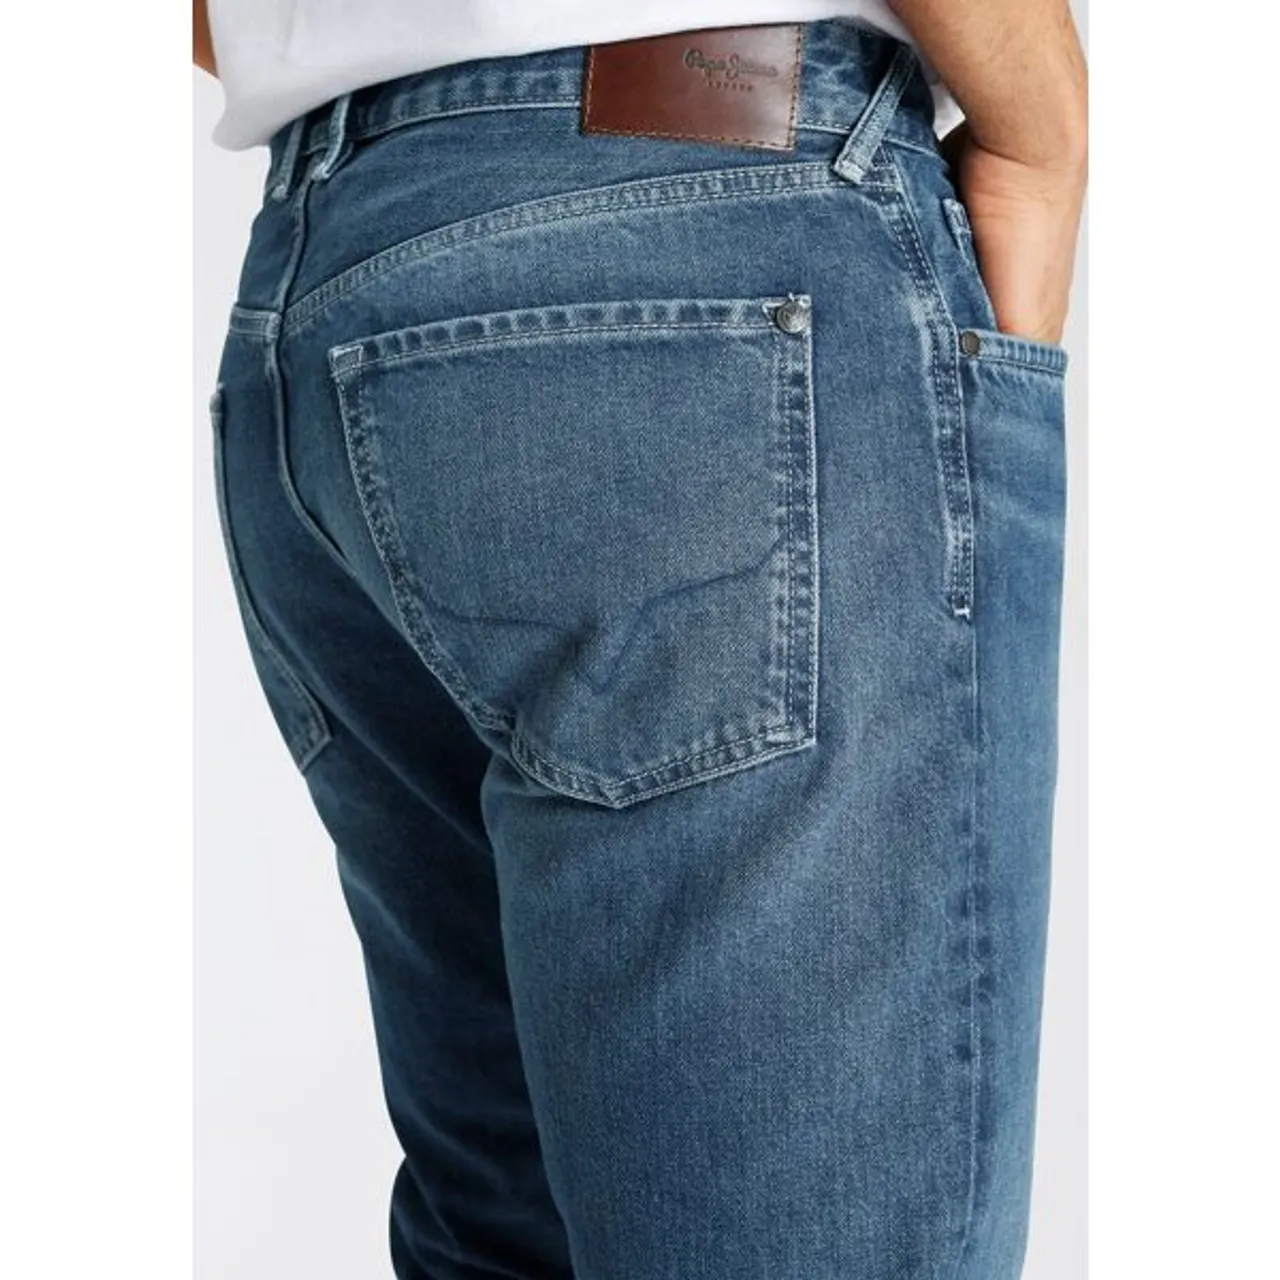 Straight-Jeans PEPE JEANS "Callen Crop" Gr. 32, Länge 30, blau (blue medium) Herren Jeans Straight Fit